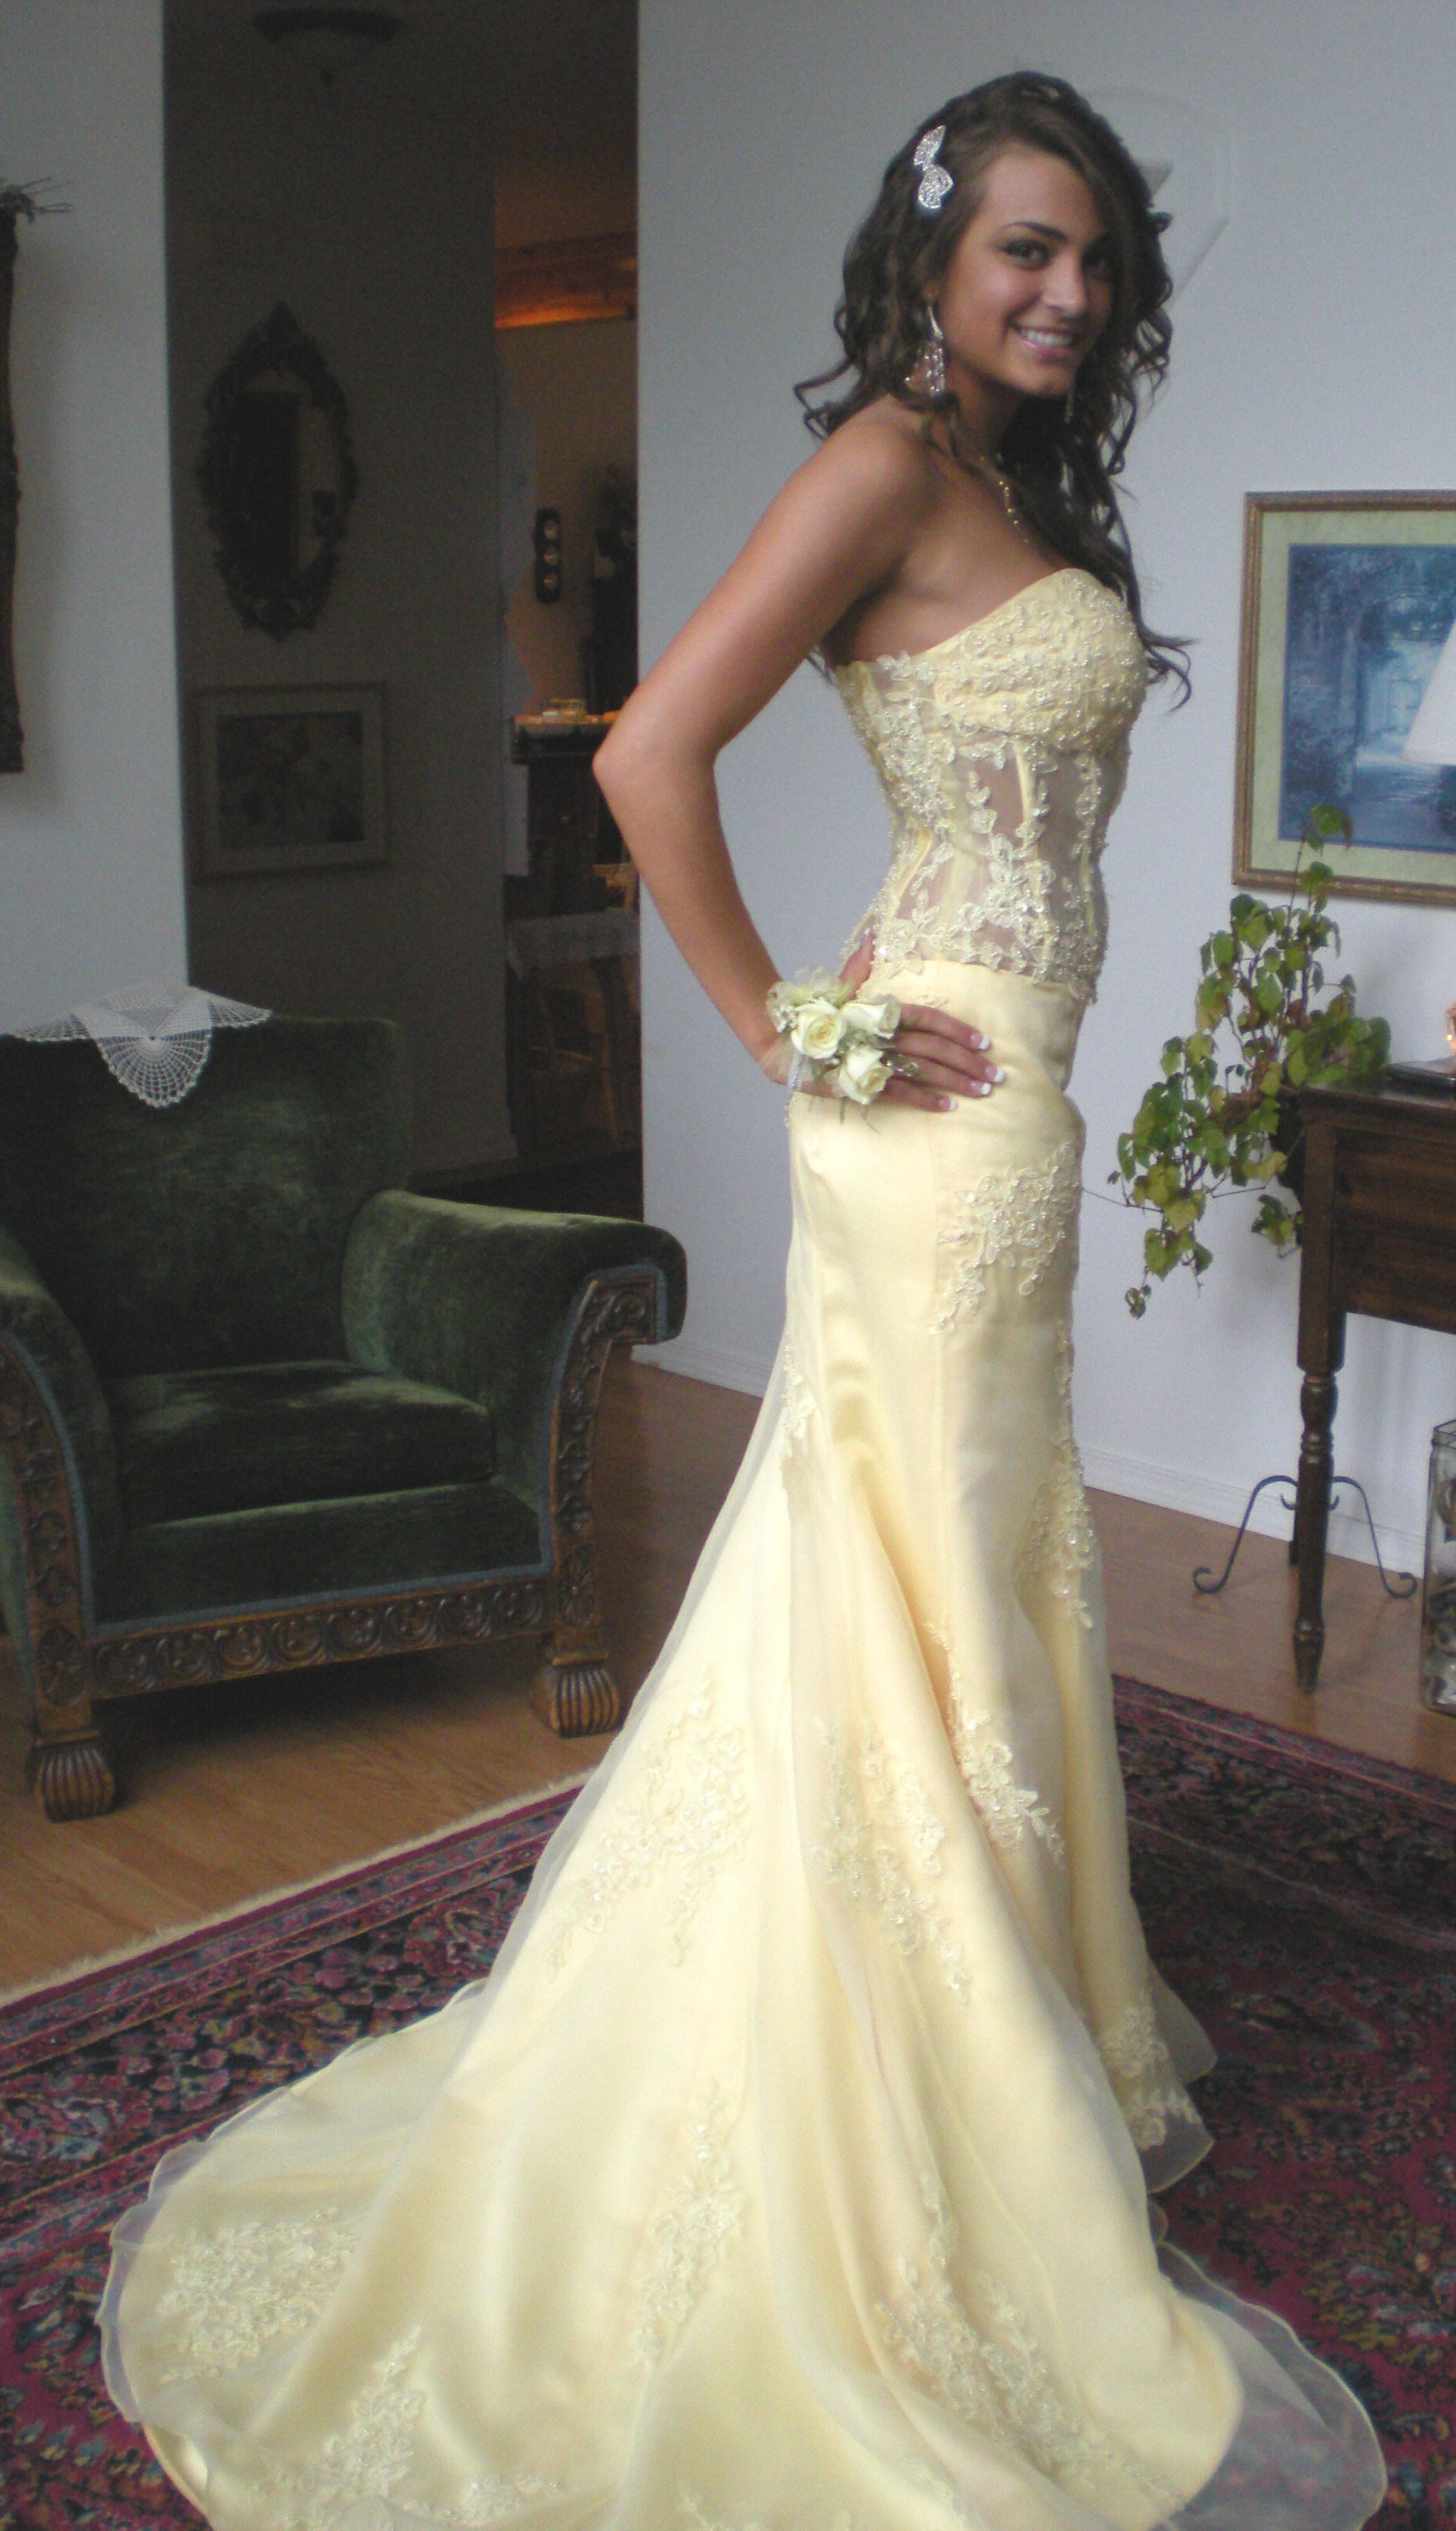 Yellow Prom Dresses